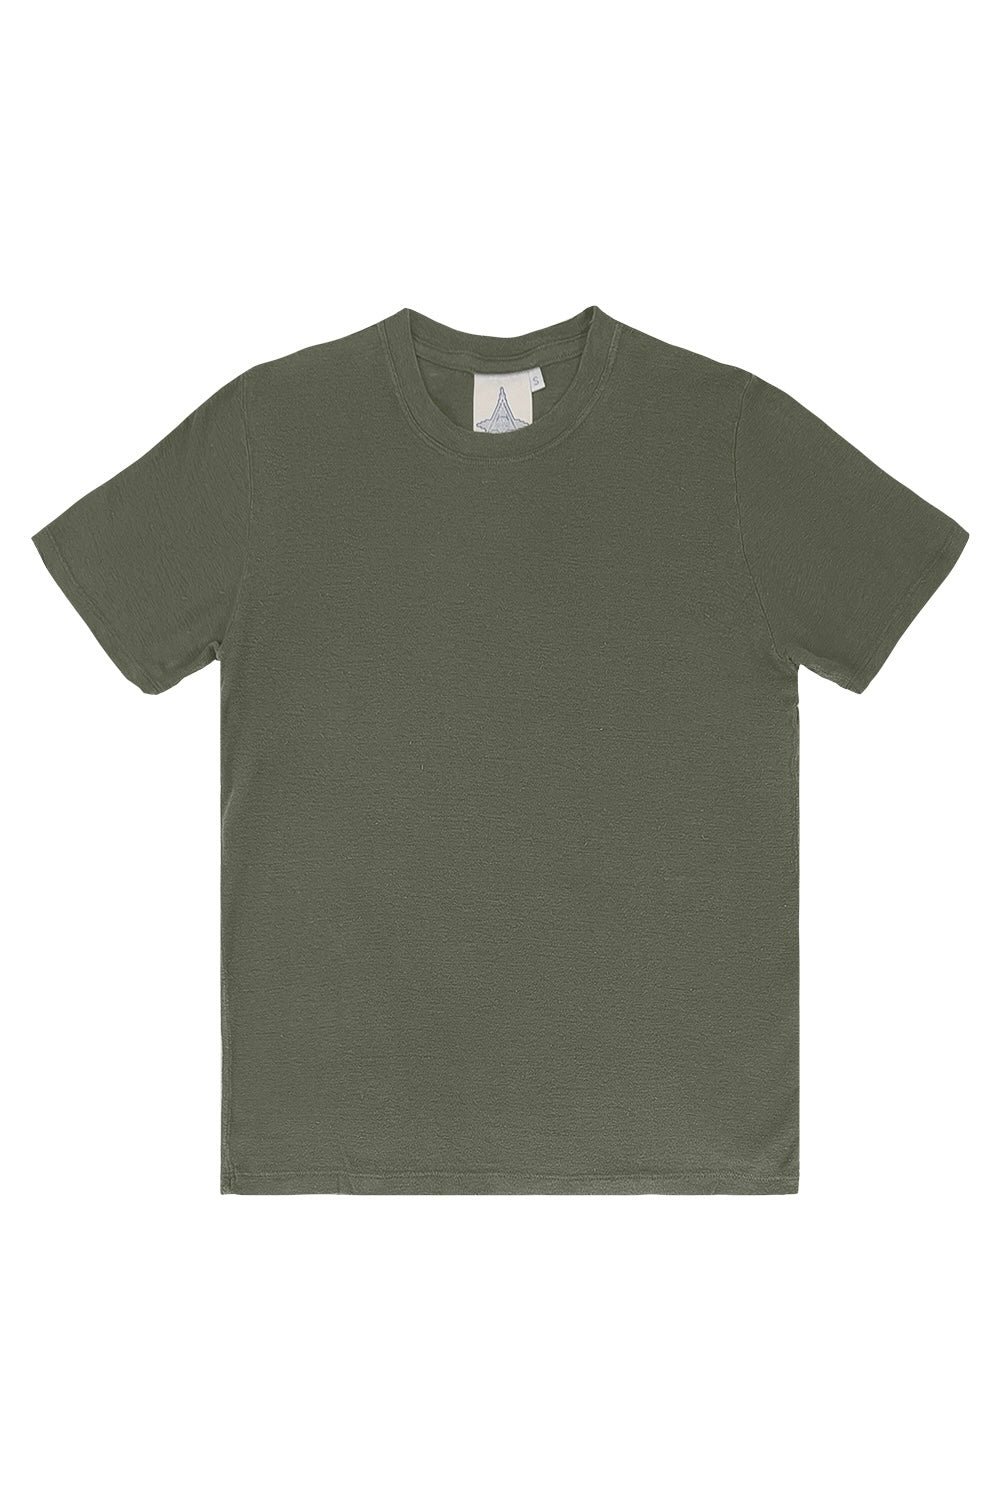 Mana 7 - 100% Hemp Tee | Jungmaven Hemp Clothing & Accessories / Color: Olive Green